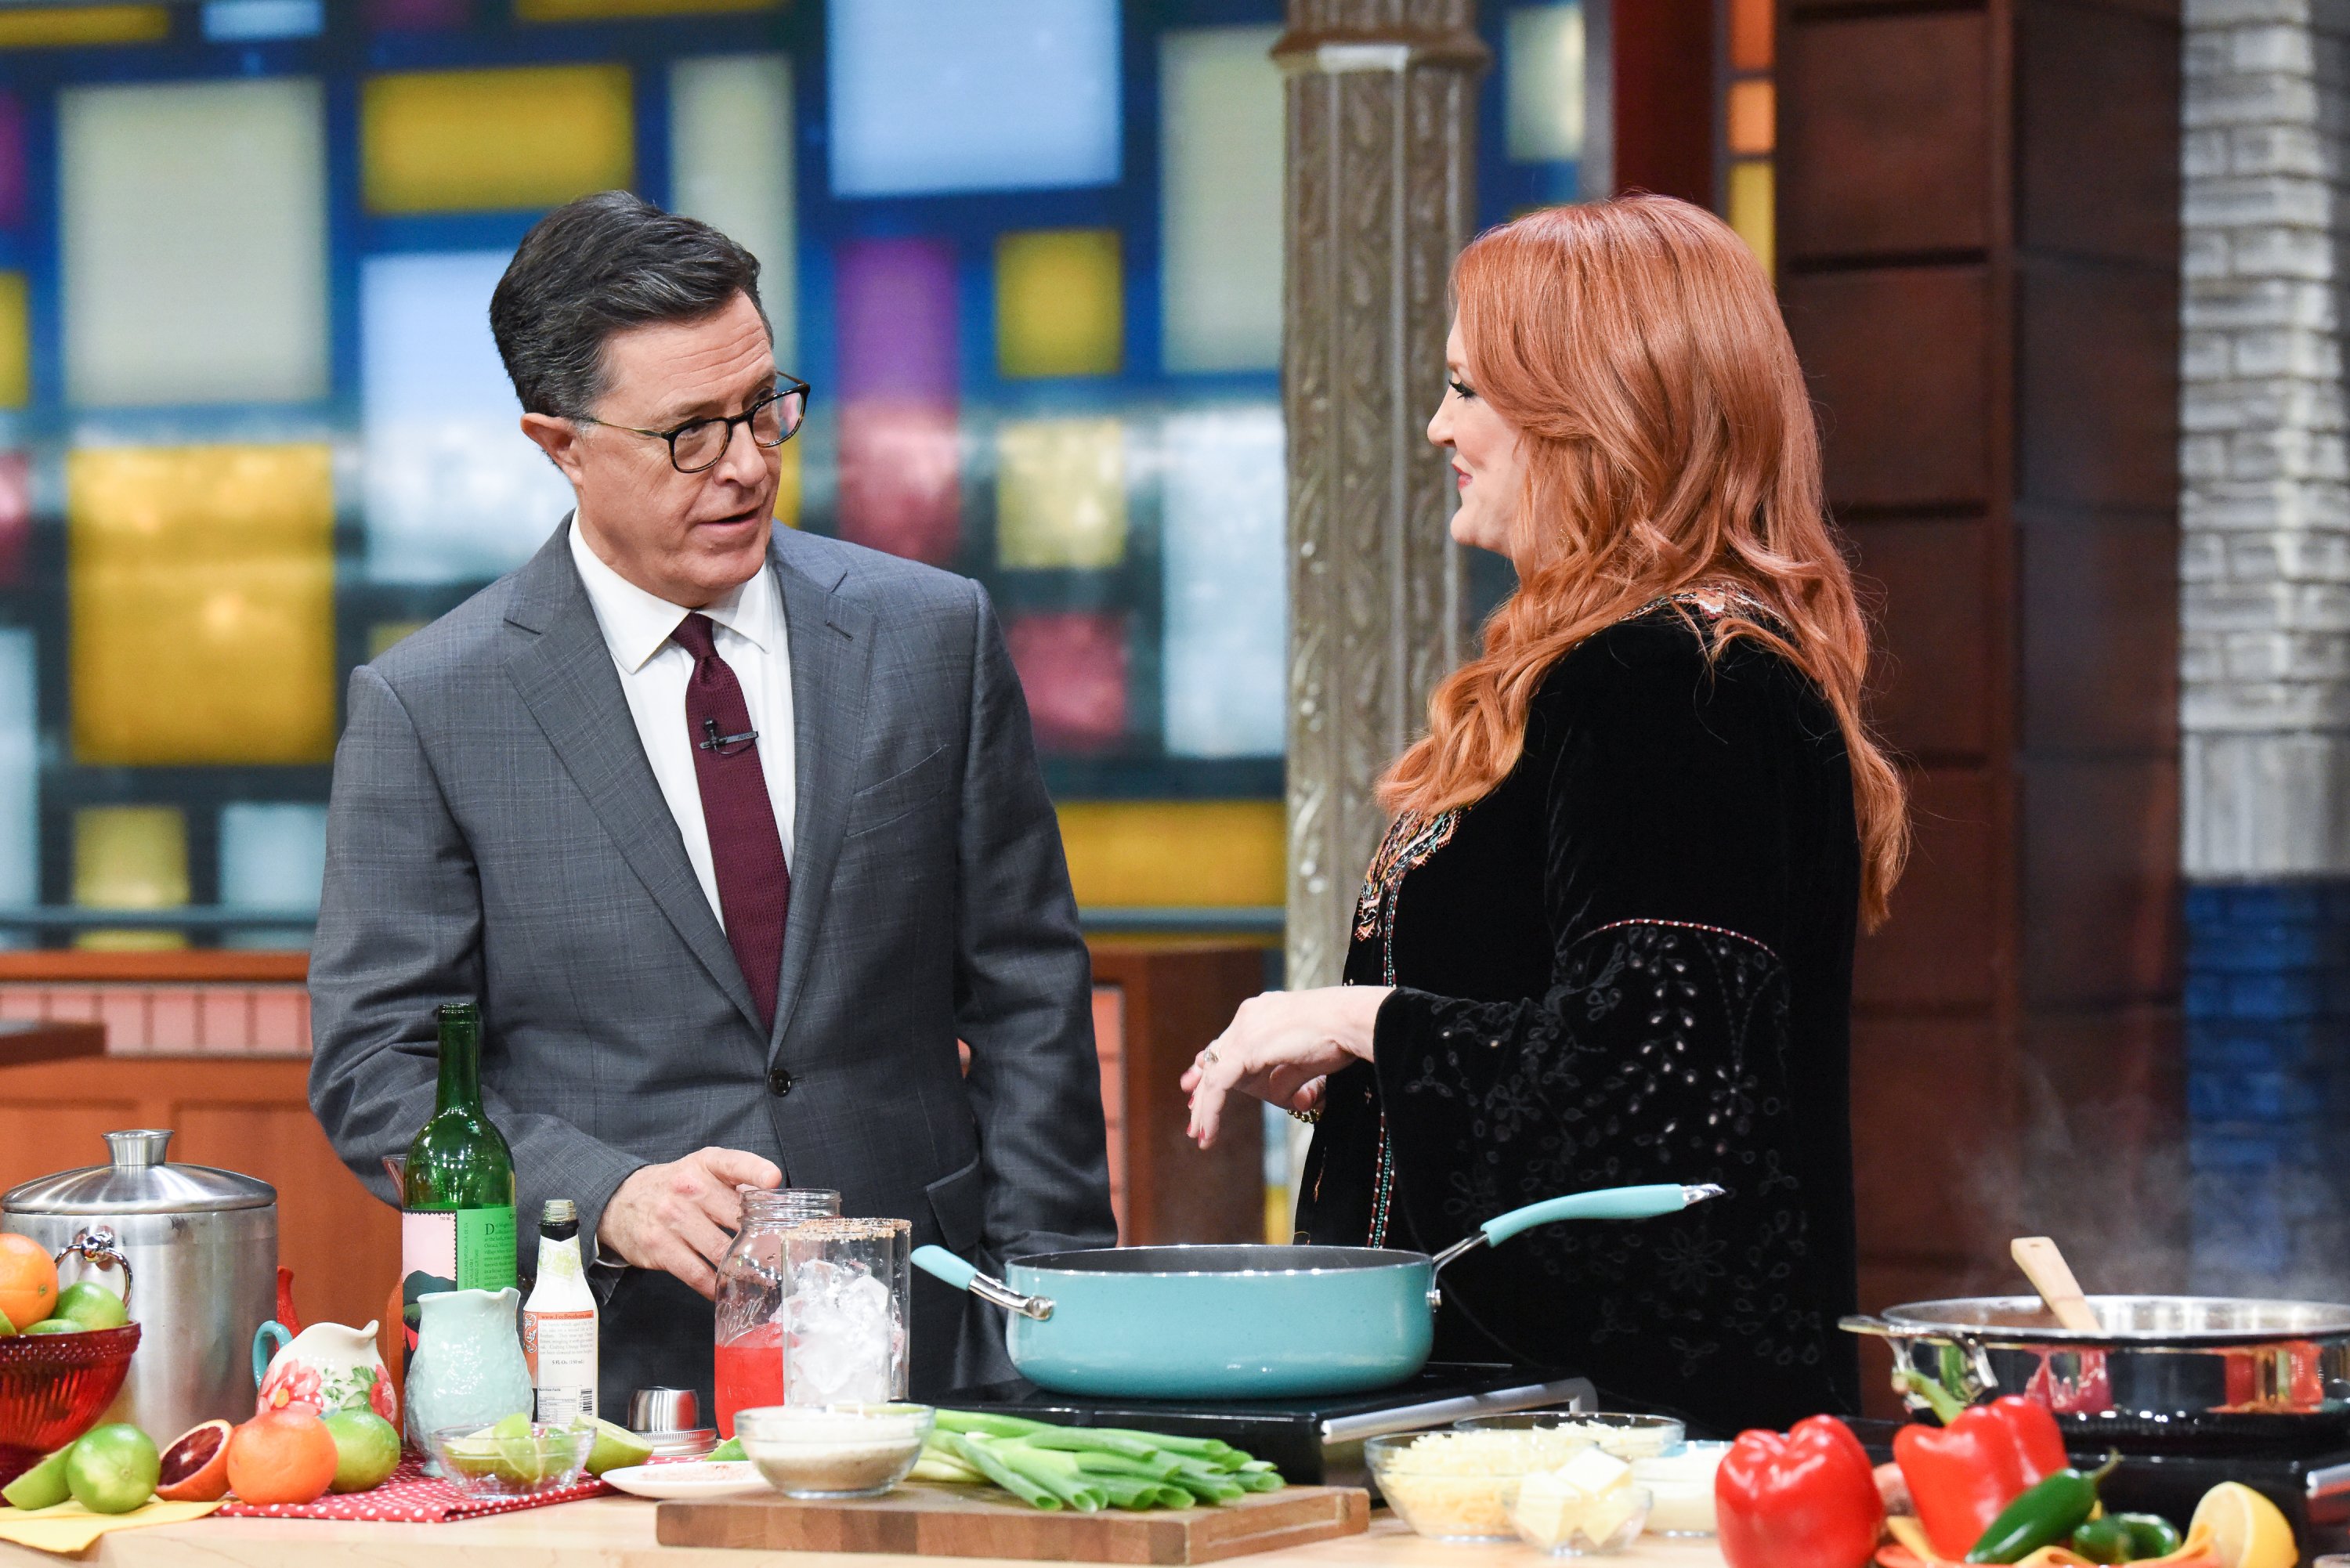 Stephen Colbert and The Pioneer Woman Ree Drummond cook.